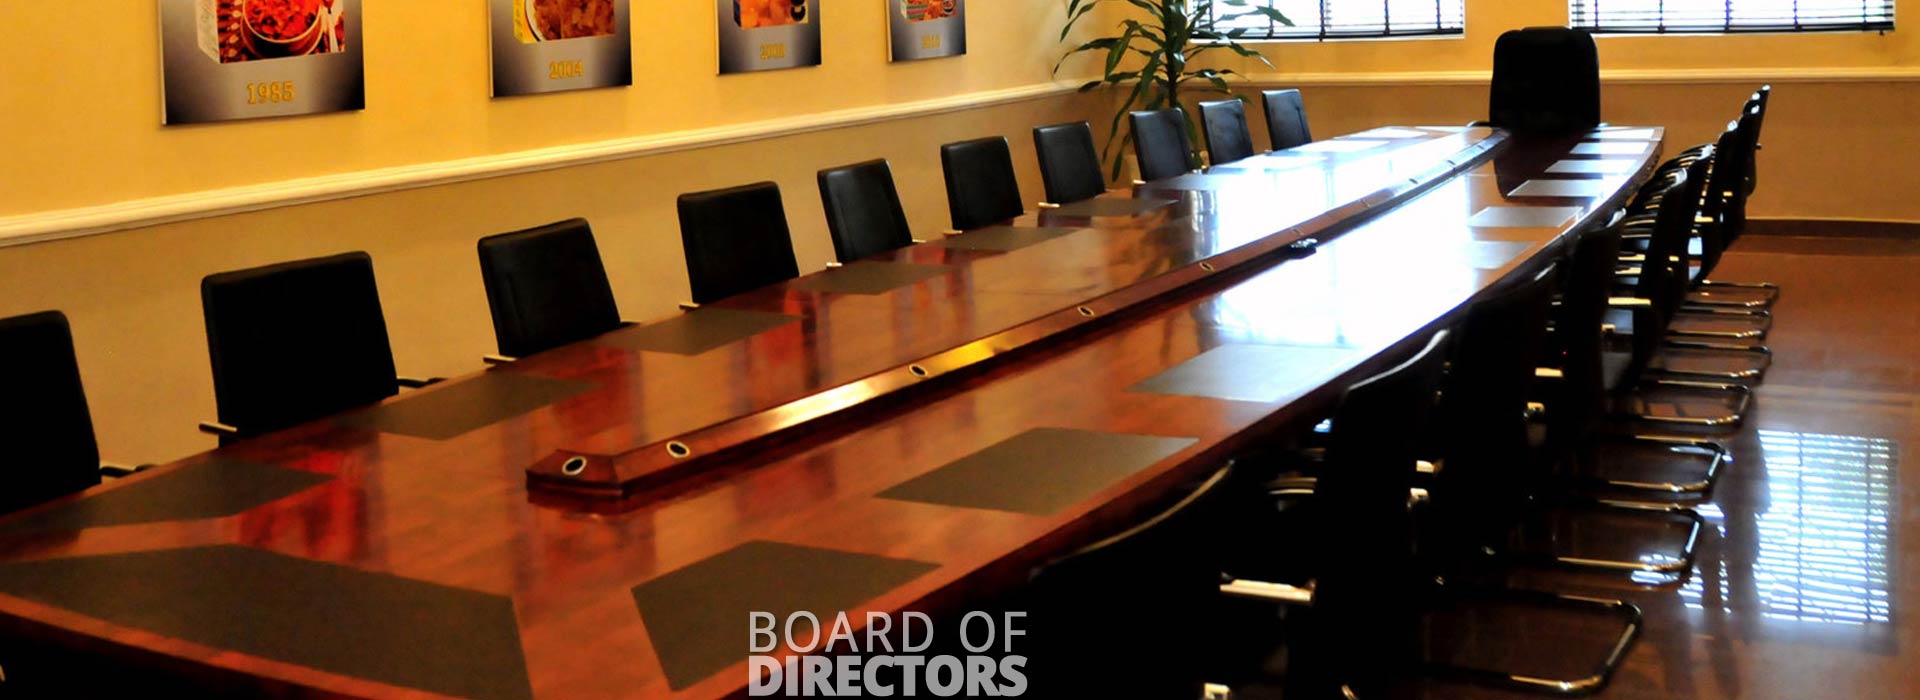 Board of Directors | Captain Pipes Ltd.